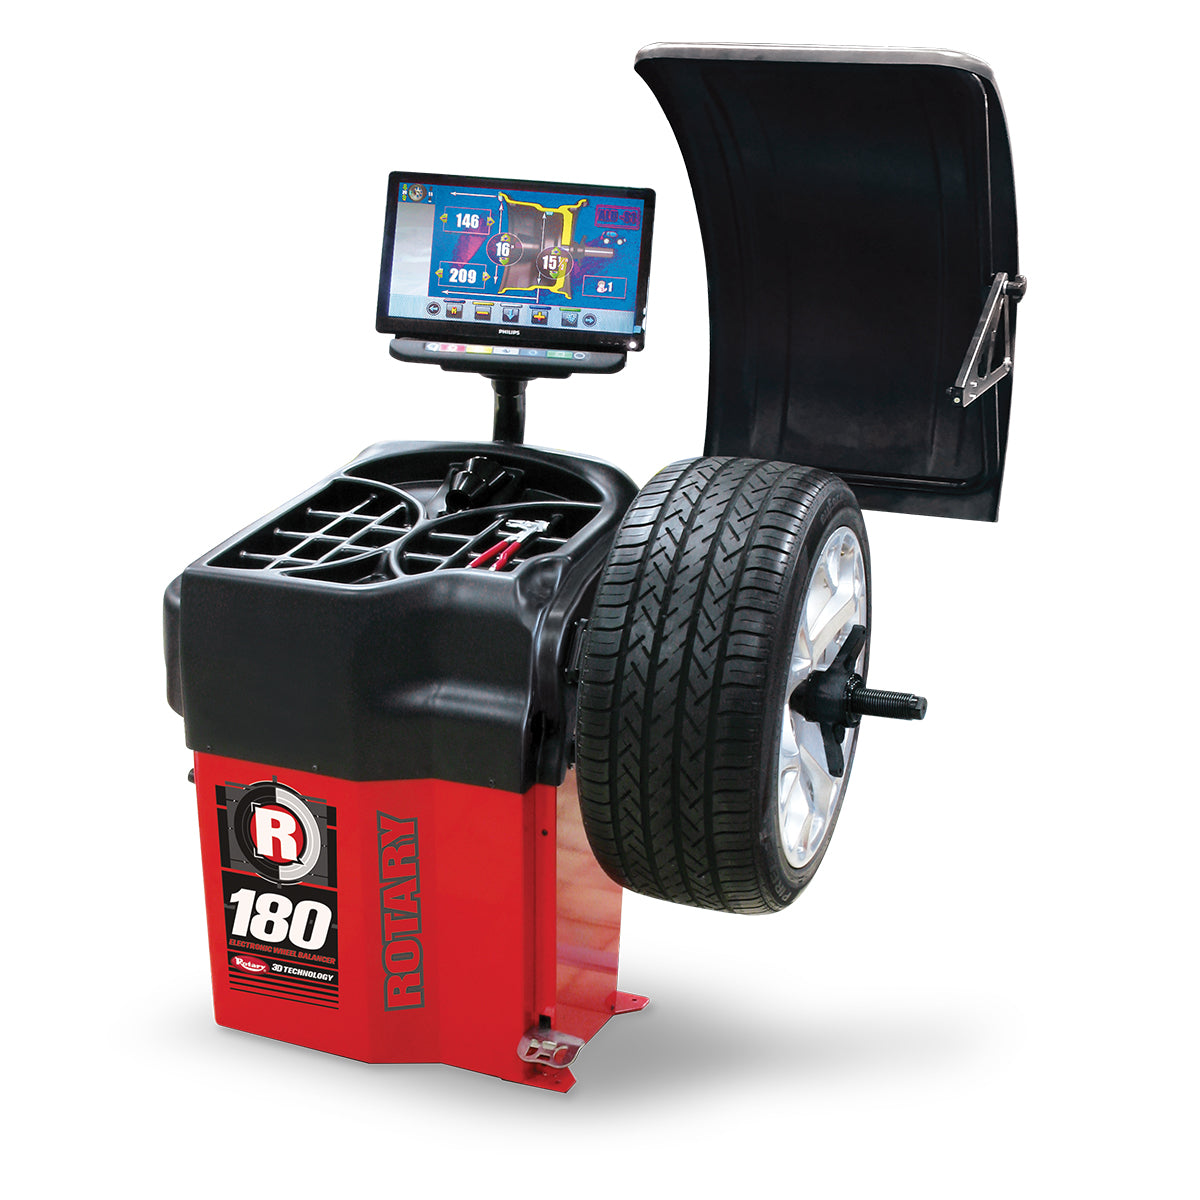 R180 Pro 3D Auto Wheel Balancer